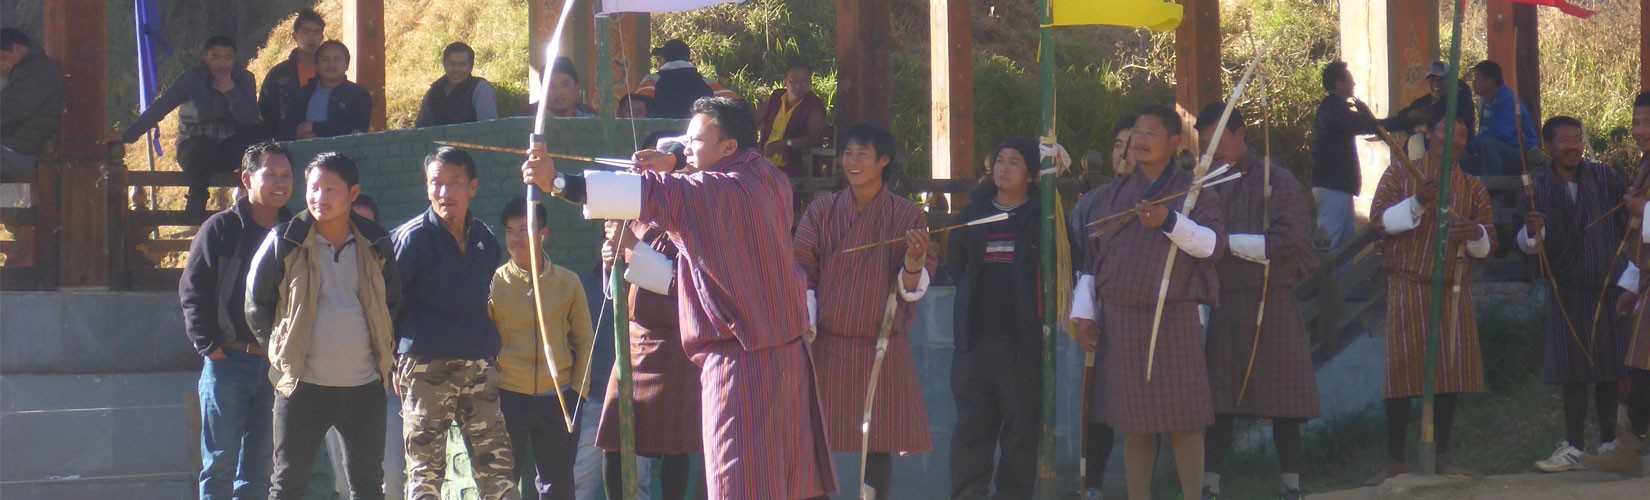 Cultural Bhutan Tour